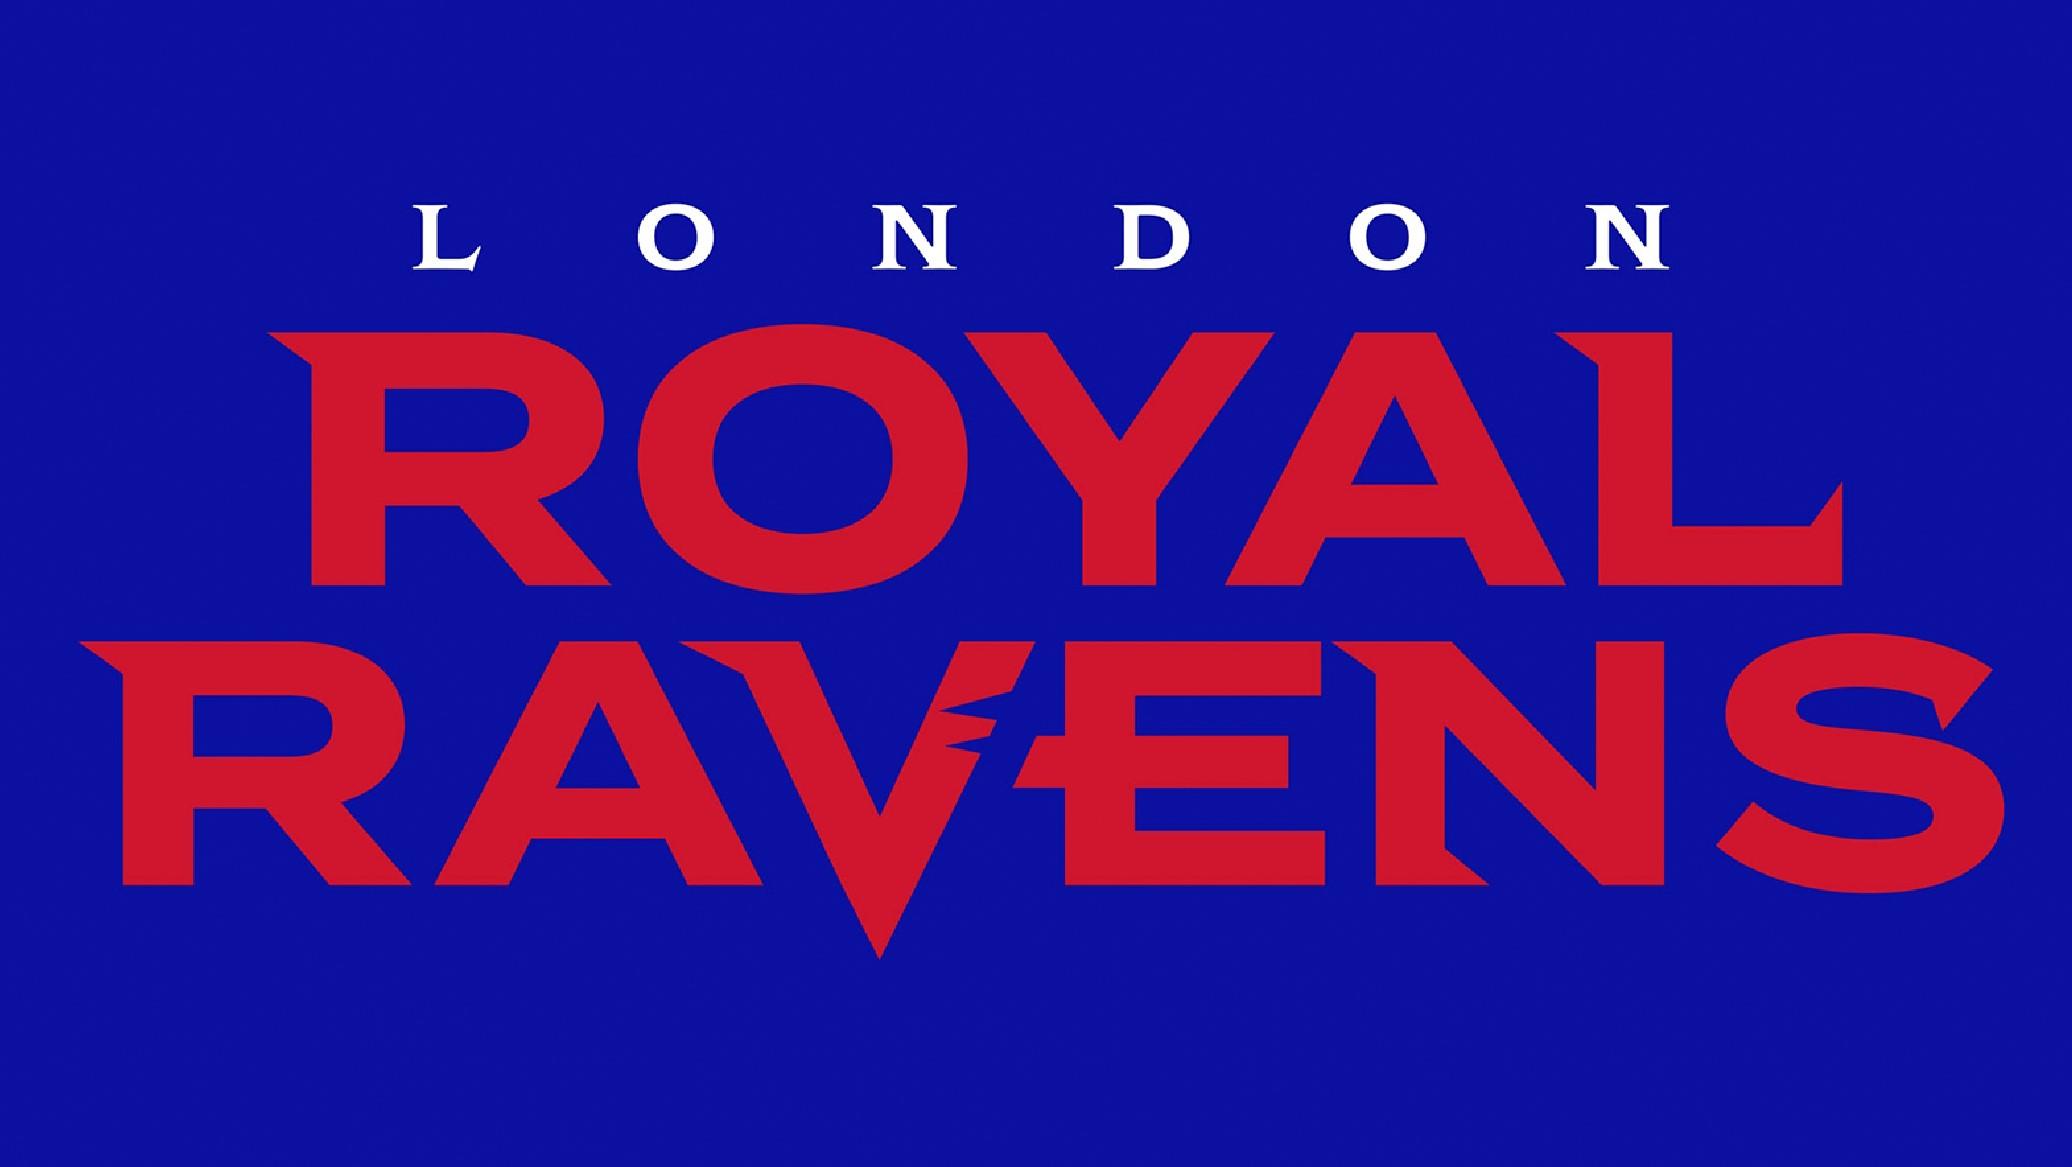 London Royal Ravens CDL team